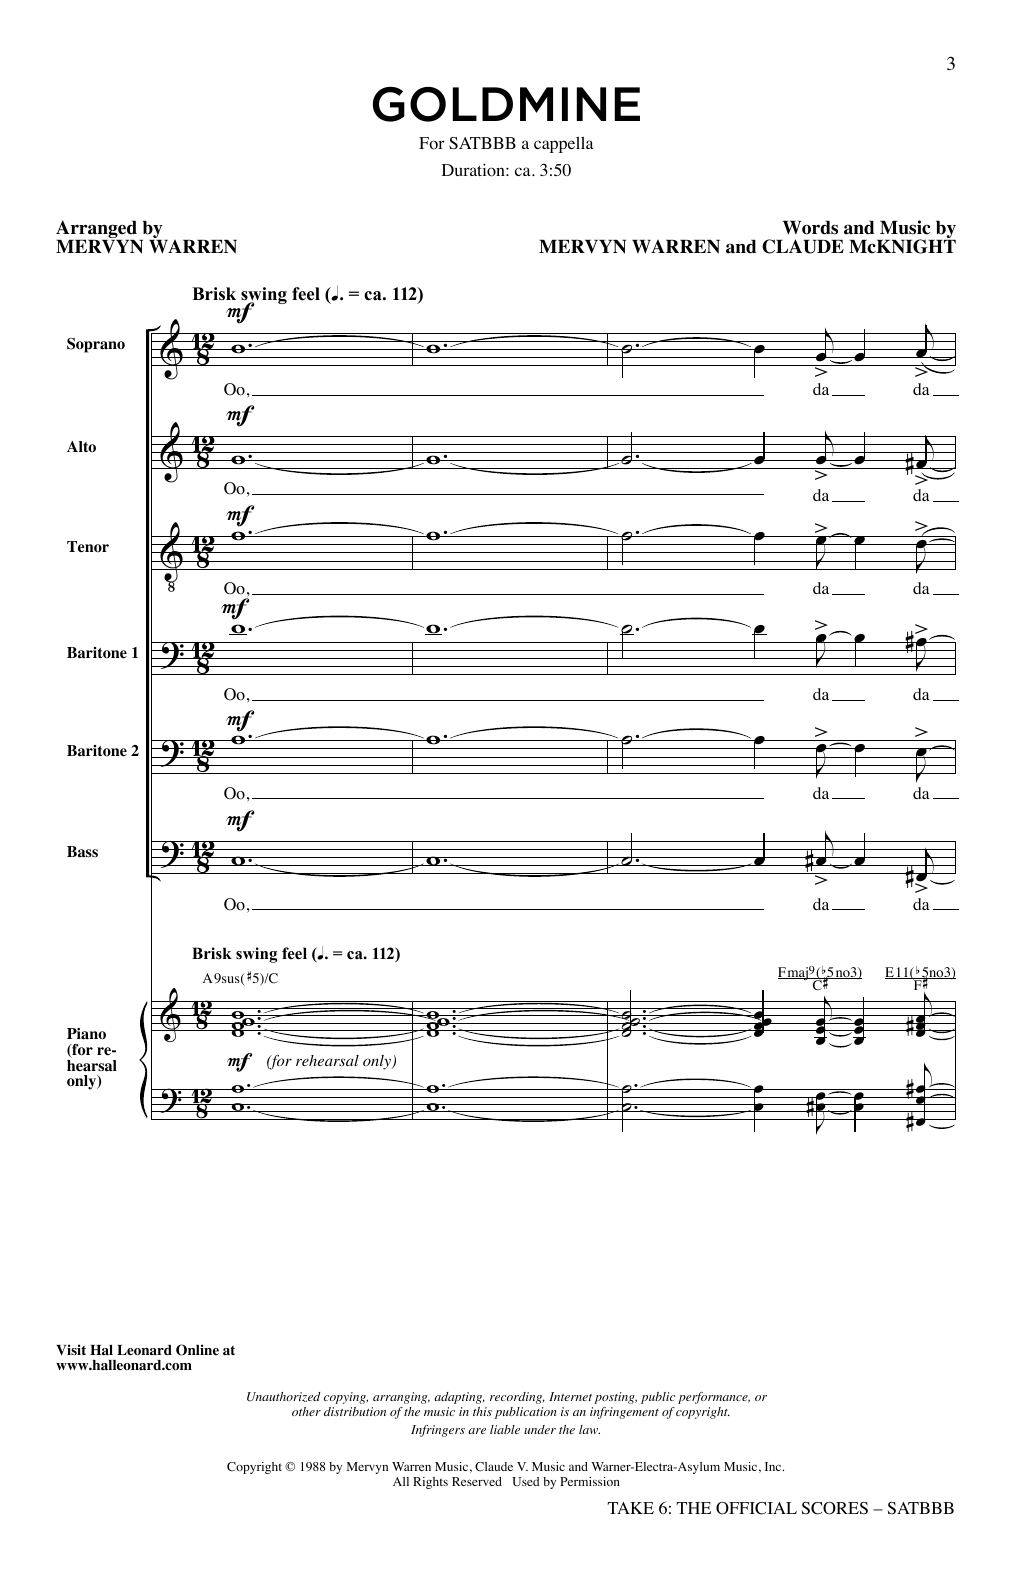 Take 6 Gold Mine (arr. Mervyn Warren) Sheet Music Notes & Chords for SATB Choir - Download or Print PDF